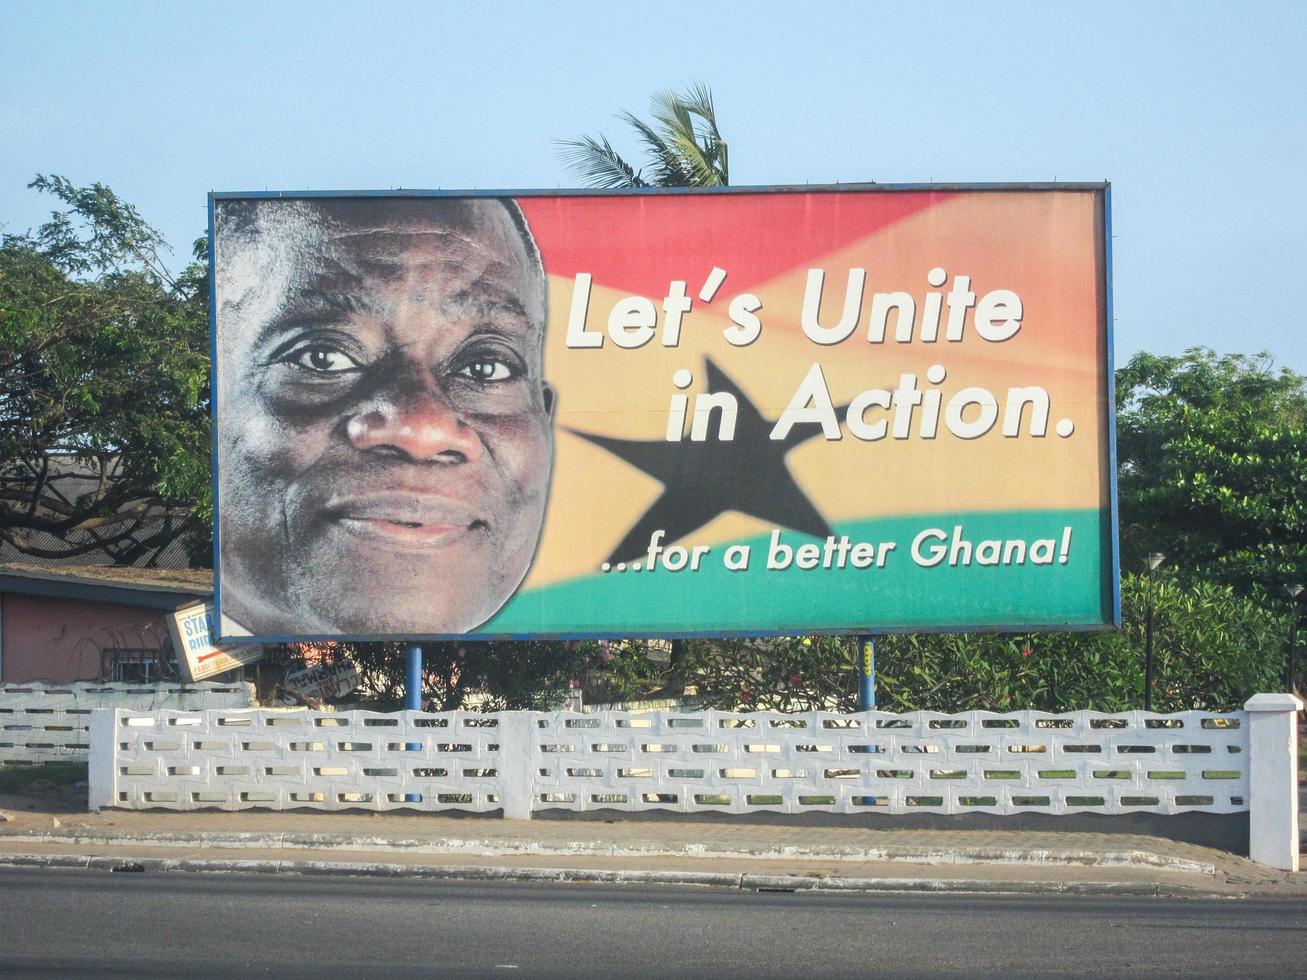 accra, Ghana - november 14, 2011 - presidentieel campagne poster in accra, Ghana. foto